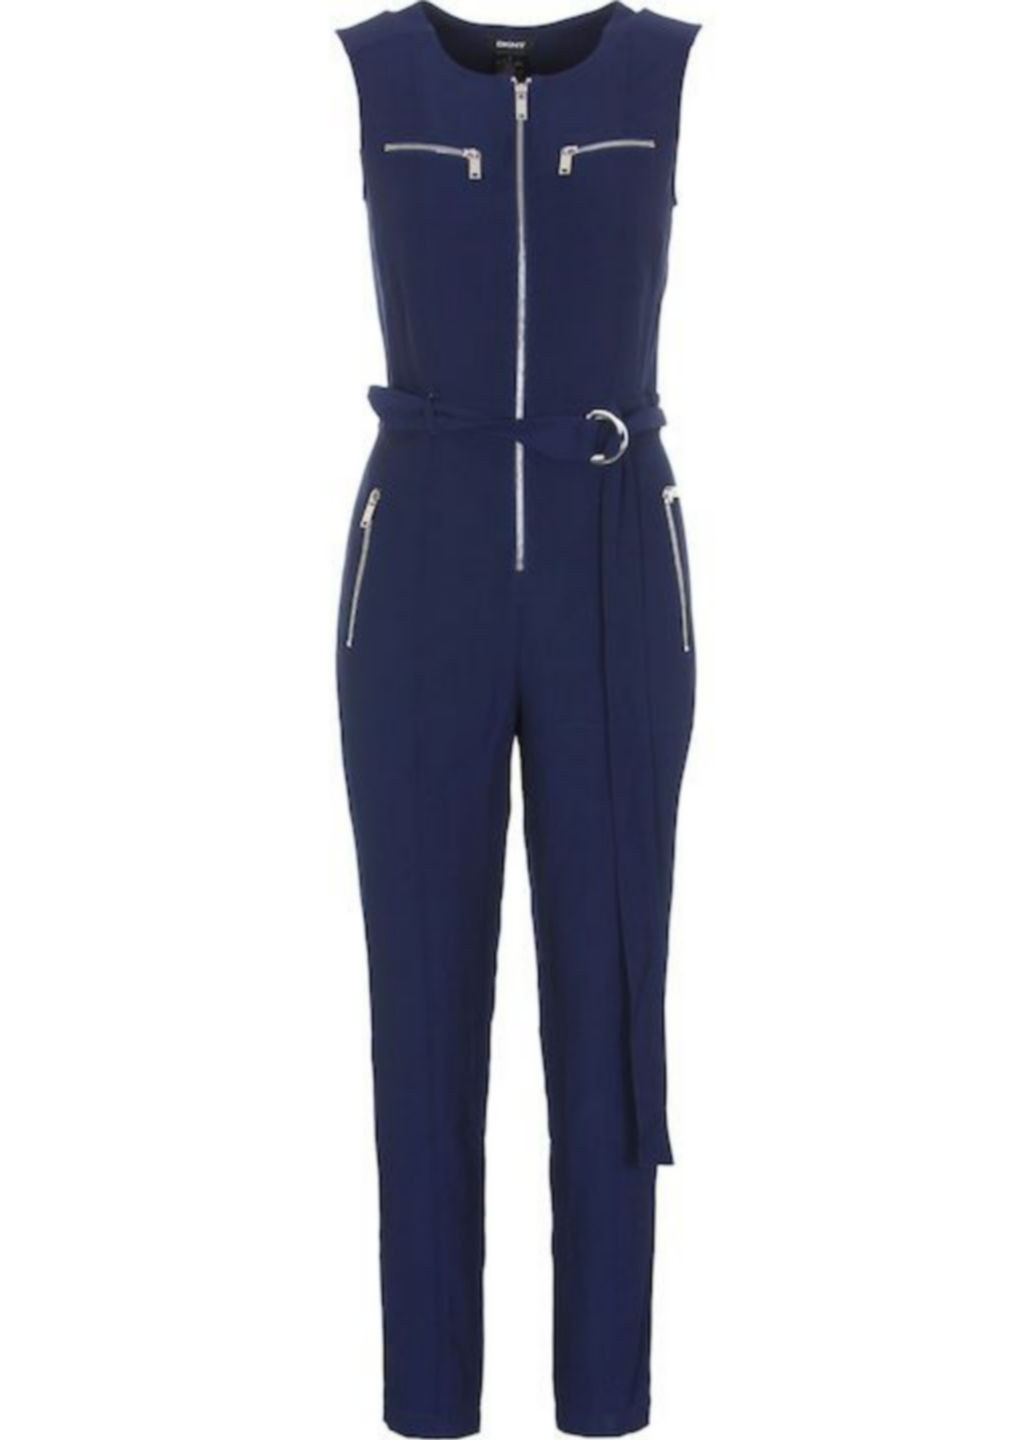 Комбинезон DKNY комбинезон-брюки однотонный синий кэжуал полиэстер